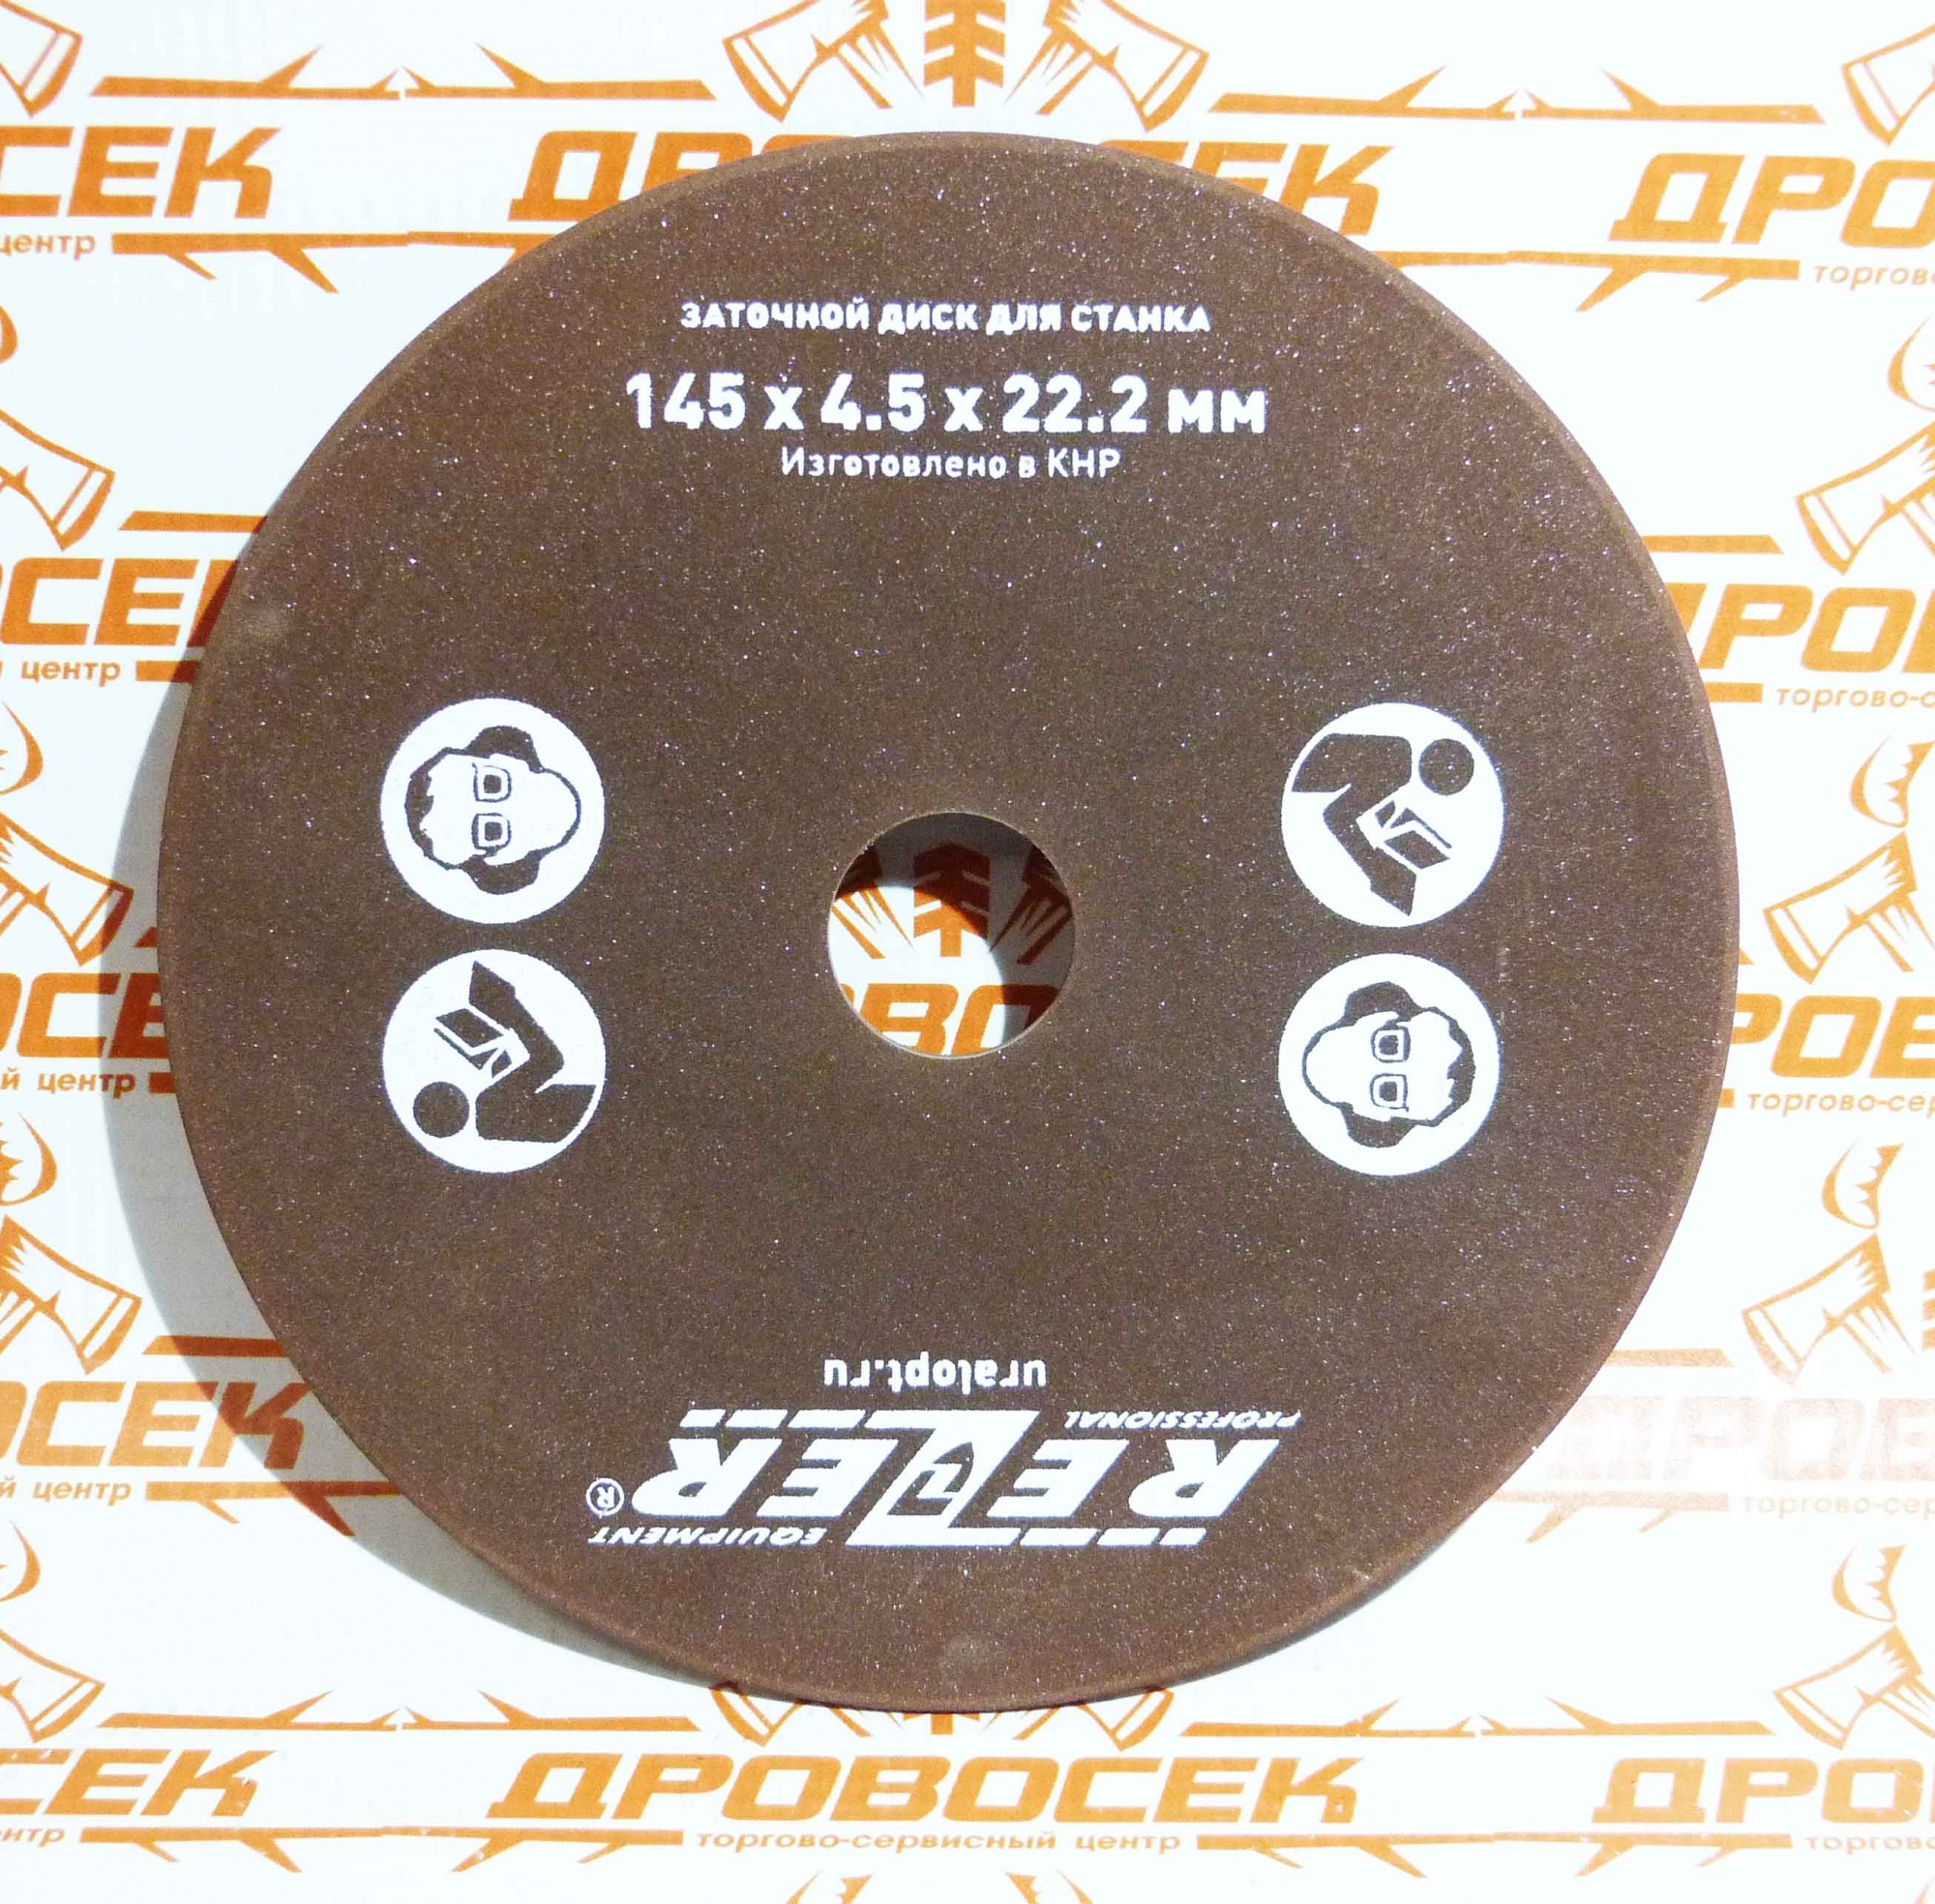 Купить диск заточки цепей. Круг заточной 145х3.2х22.2 мм для станка EG-235-C Rezer. Круг заточной Rezer для станка EG-235. Диск для заточки цепей 145 х 3,2 х 22,2 мм Rezer для EG-235-CN/EG-. Диск для заточки цепей 104 х 4.5 х 23.2 мм Rezer для EG-.